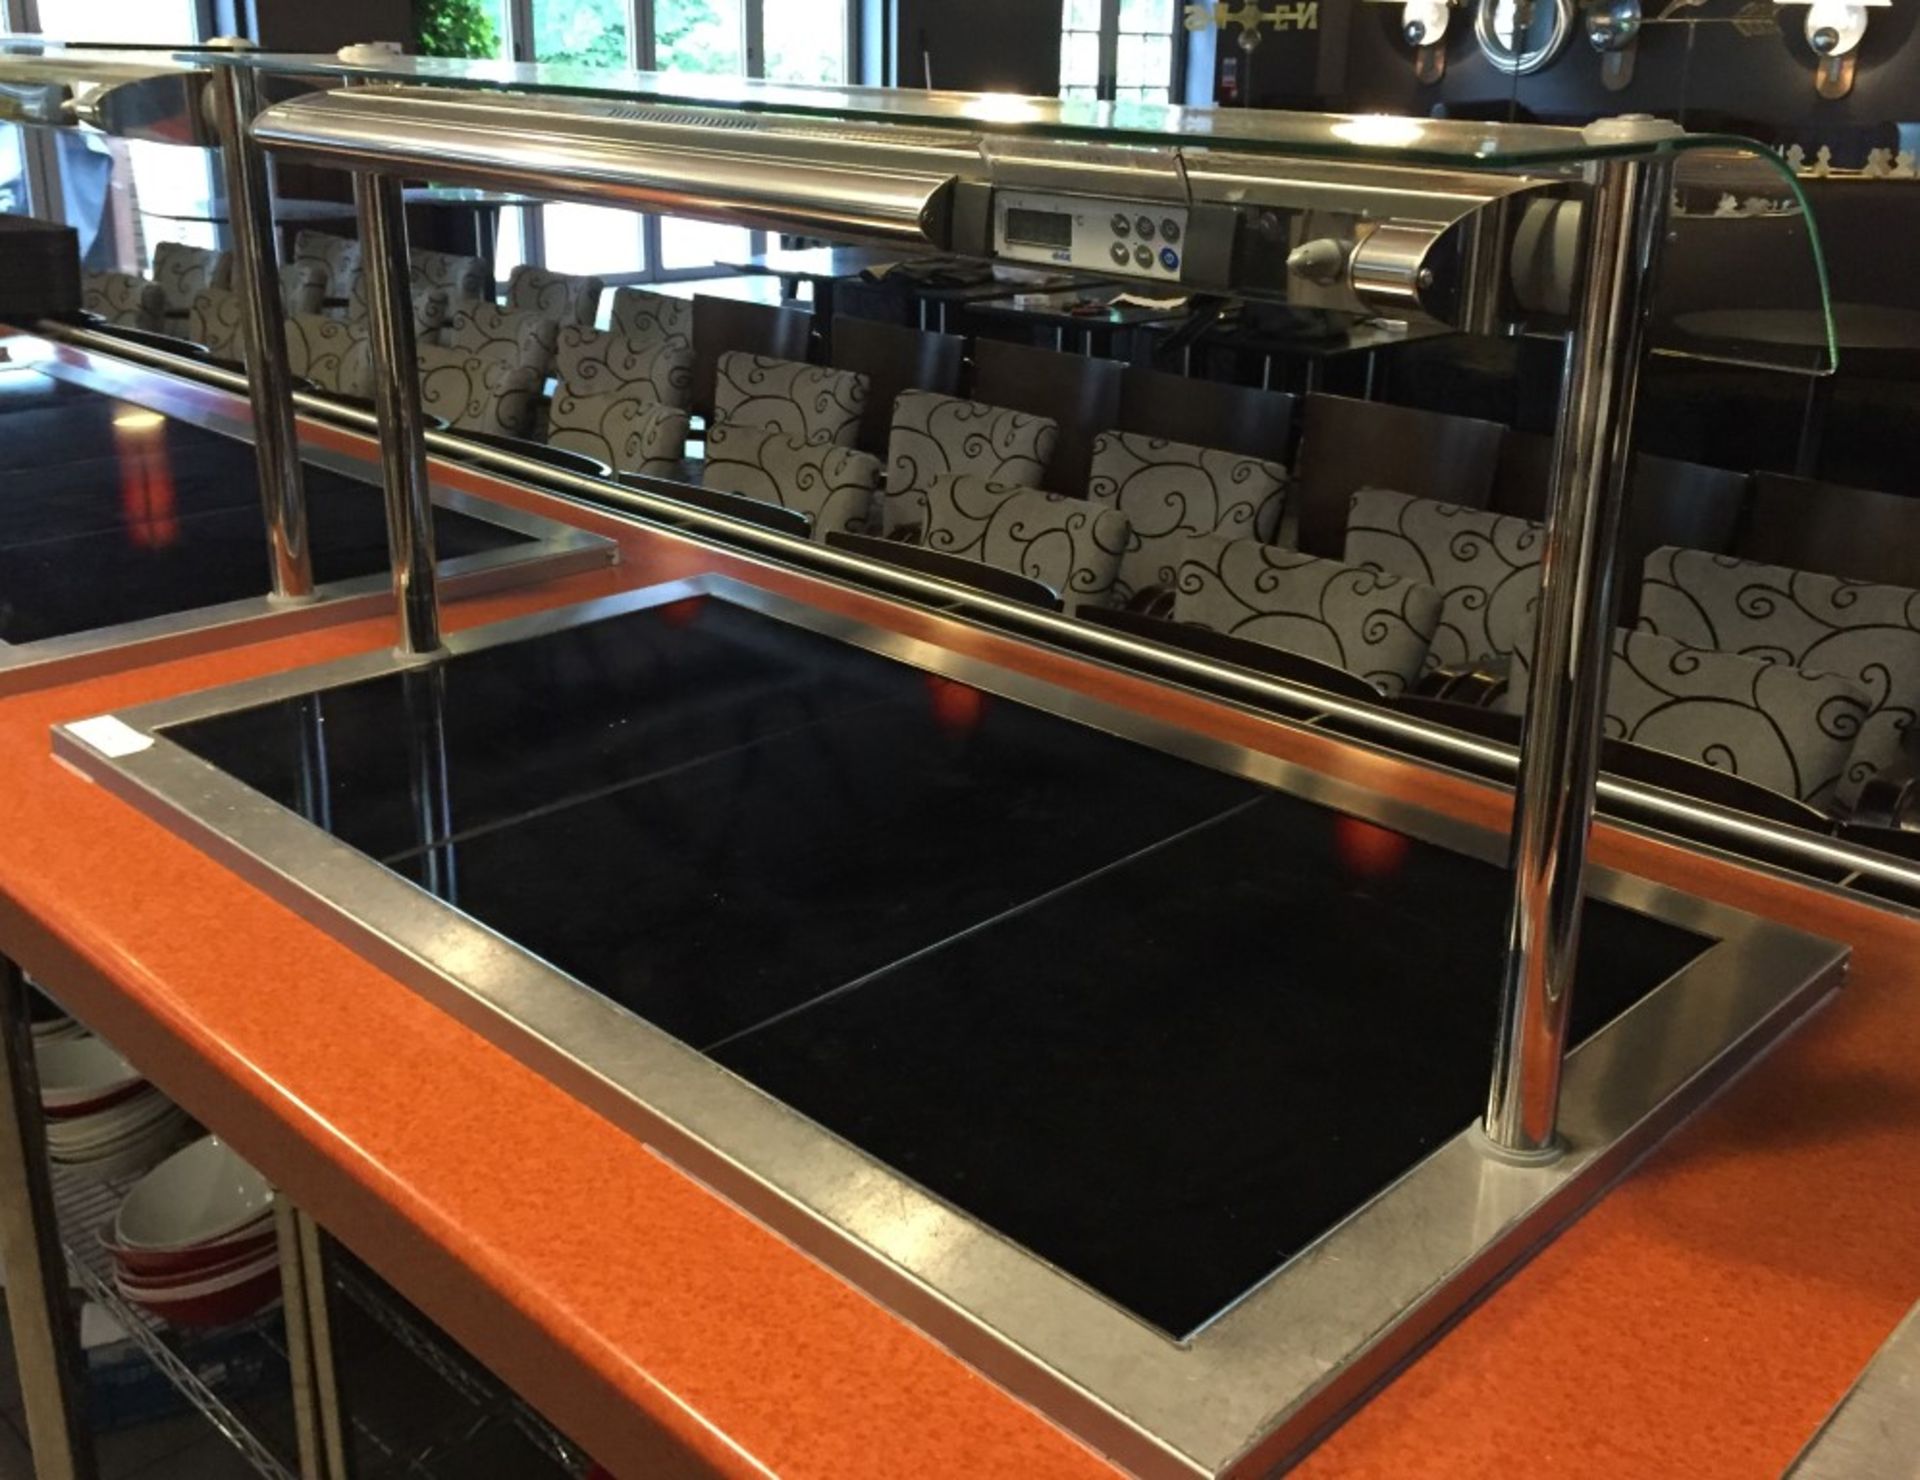 1 x CED Designline Self Serve Ceran Glass Hotplate - Counter Drop In Design With Overhead Heat - Image 2 of 4